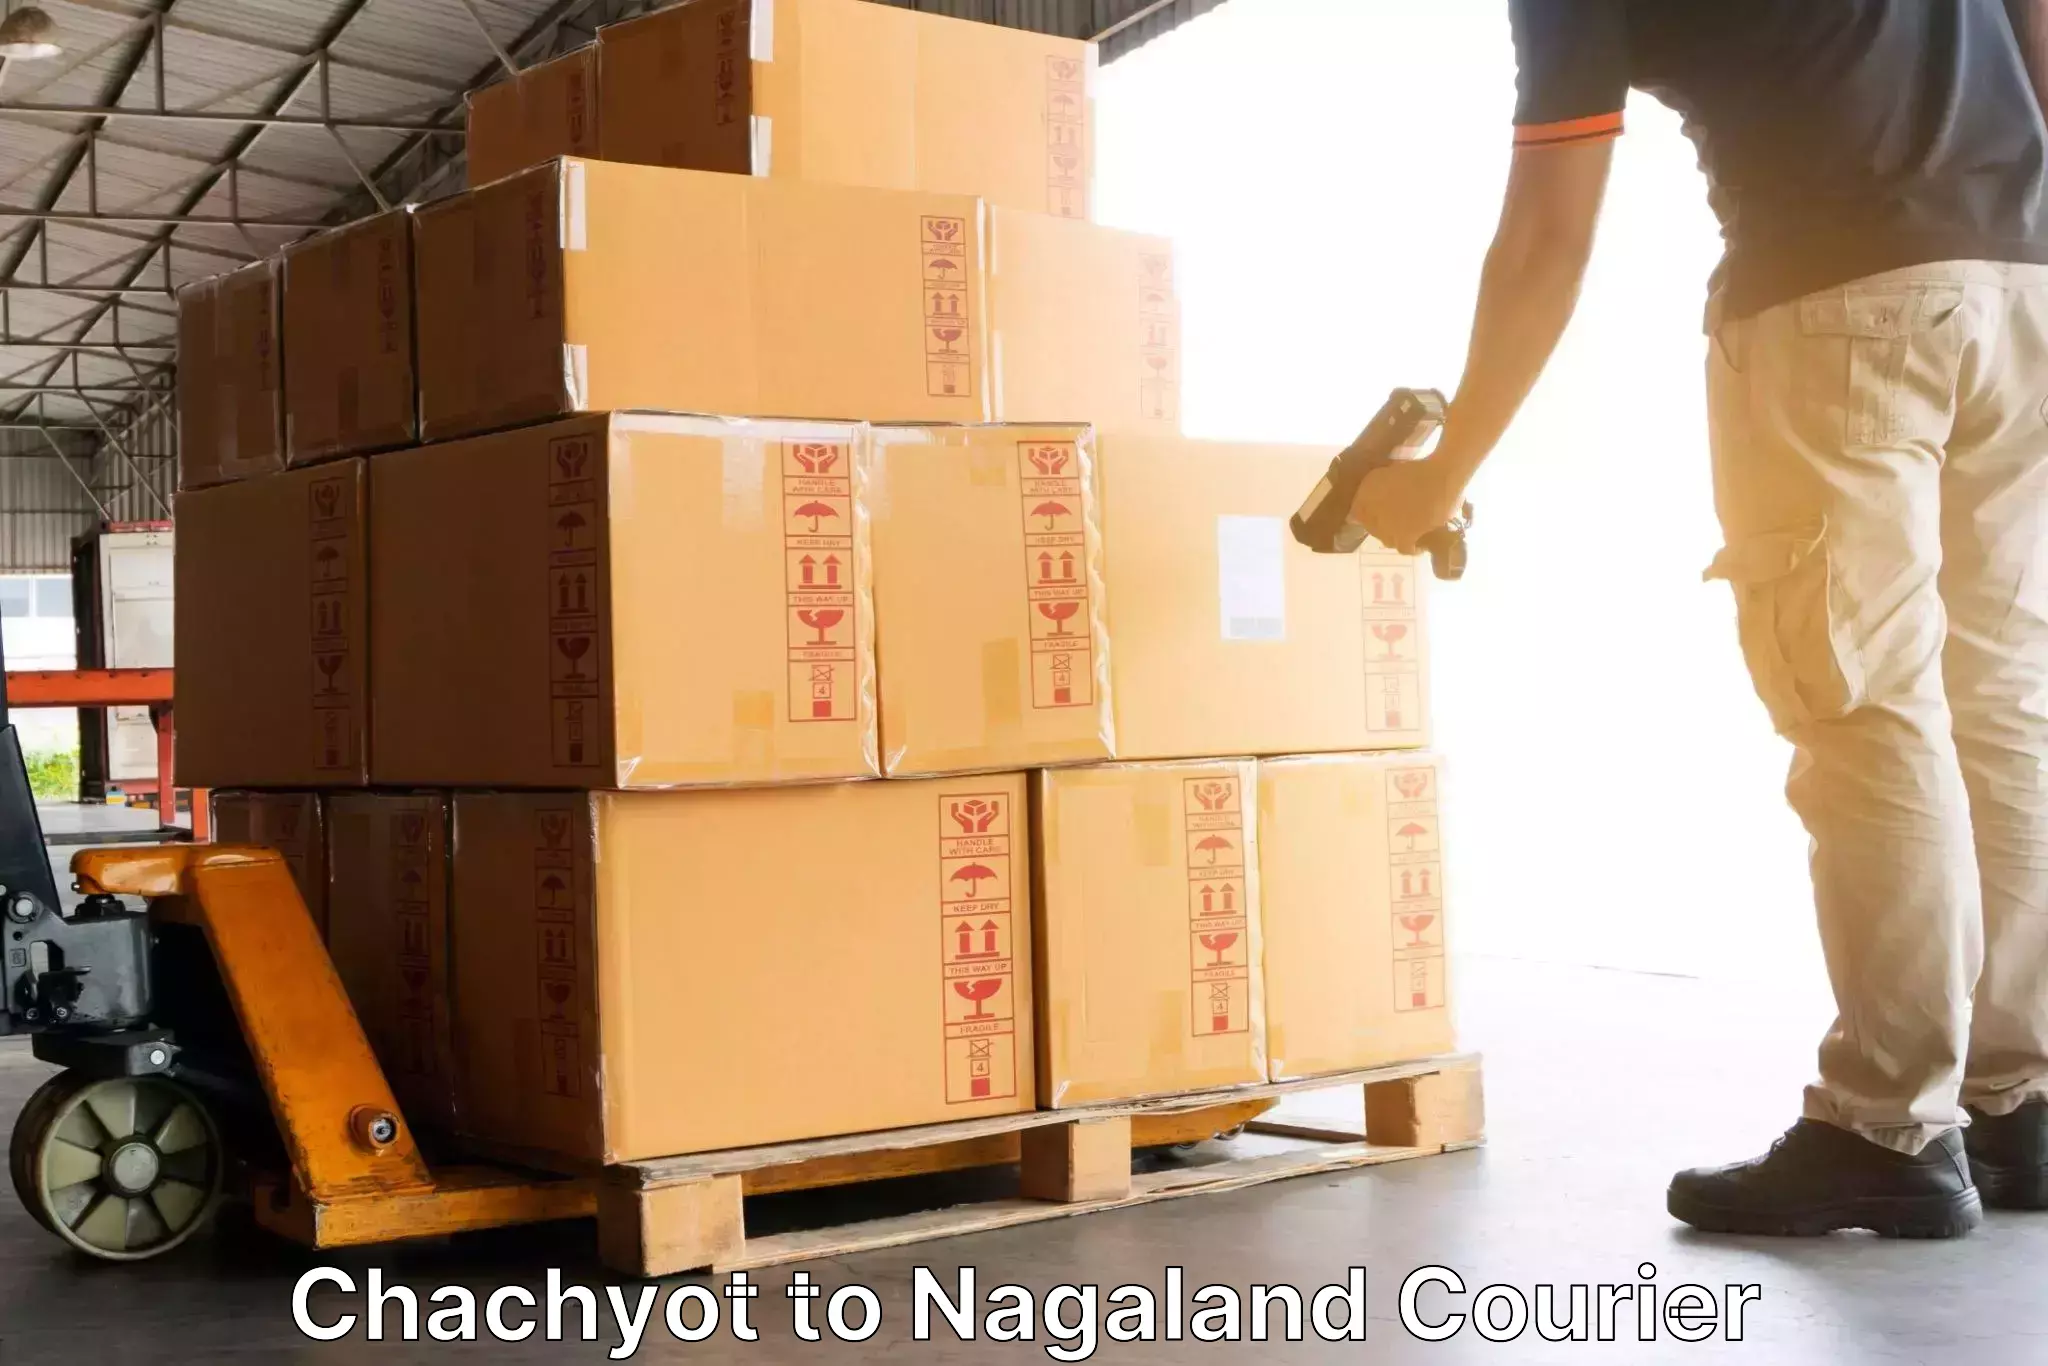 Quick booking process Chachyot to Nagaland